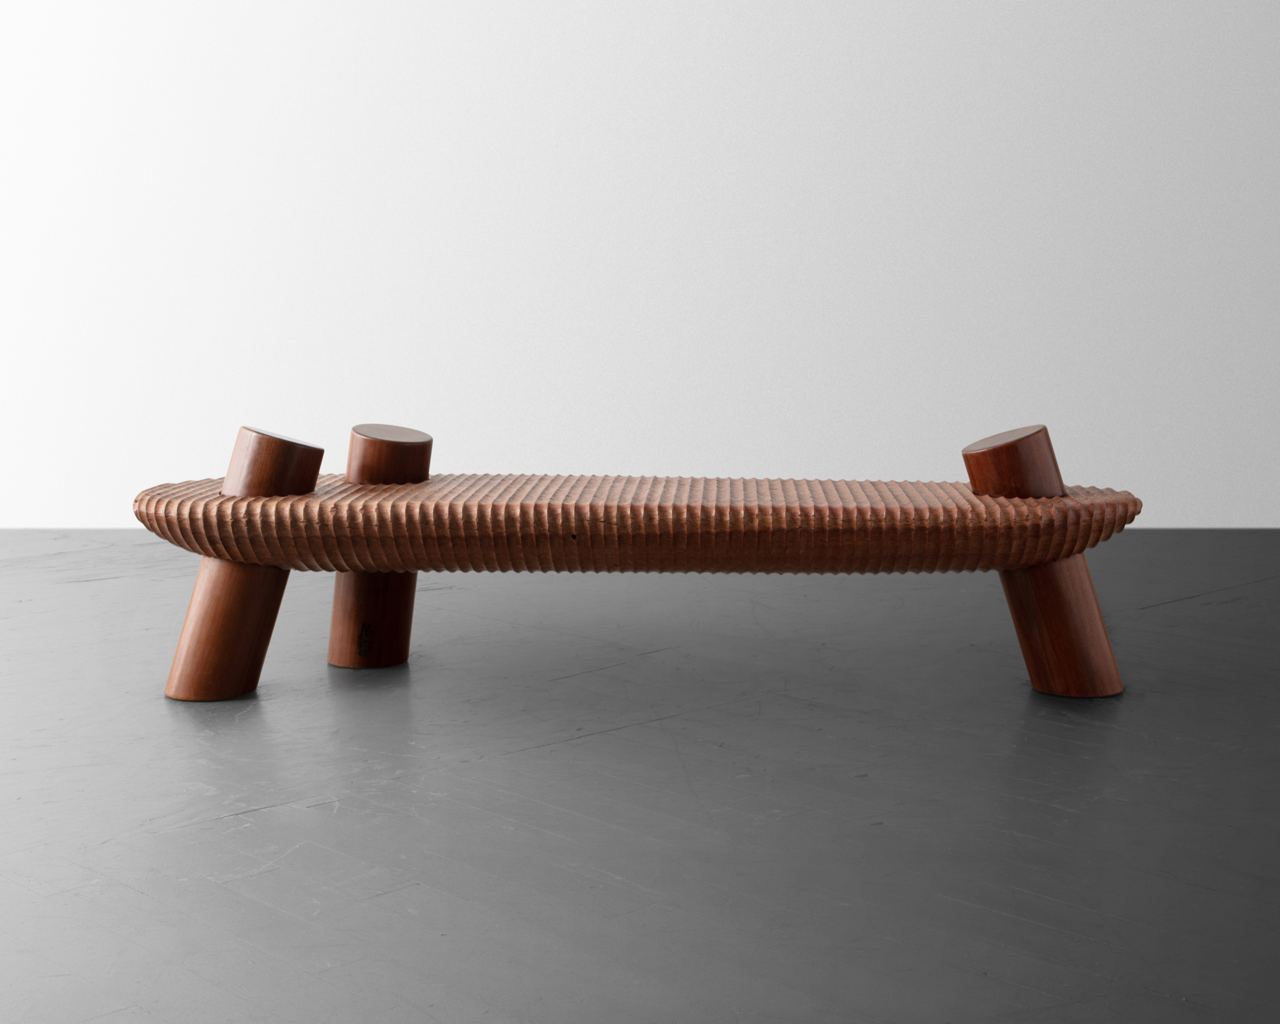 Threelegged bench with legs in ipê wood